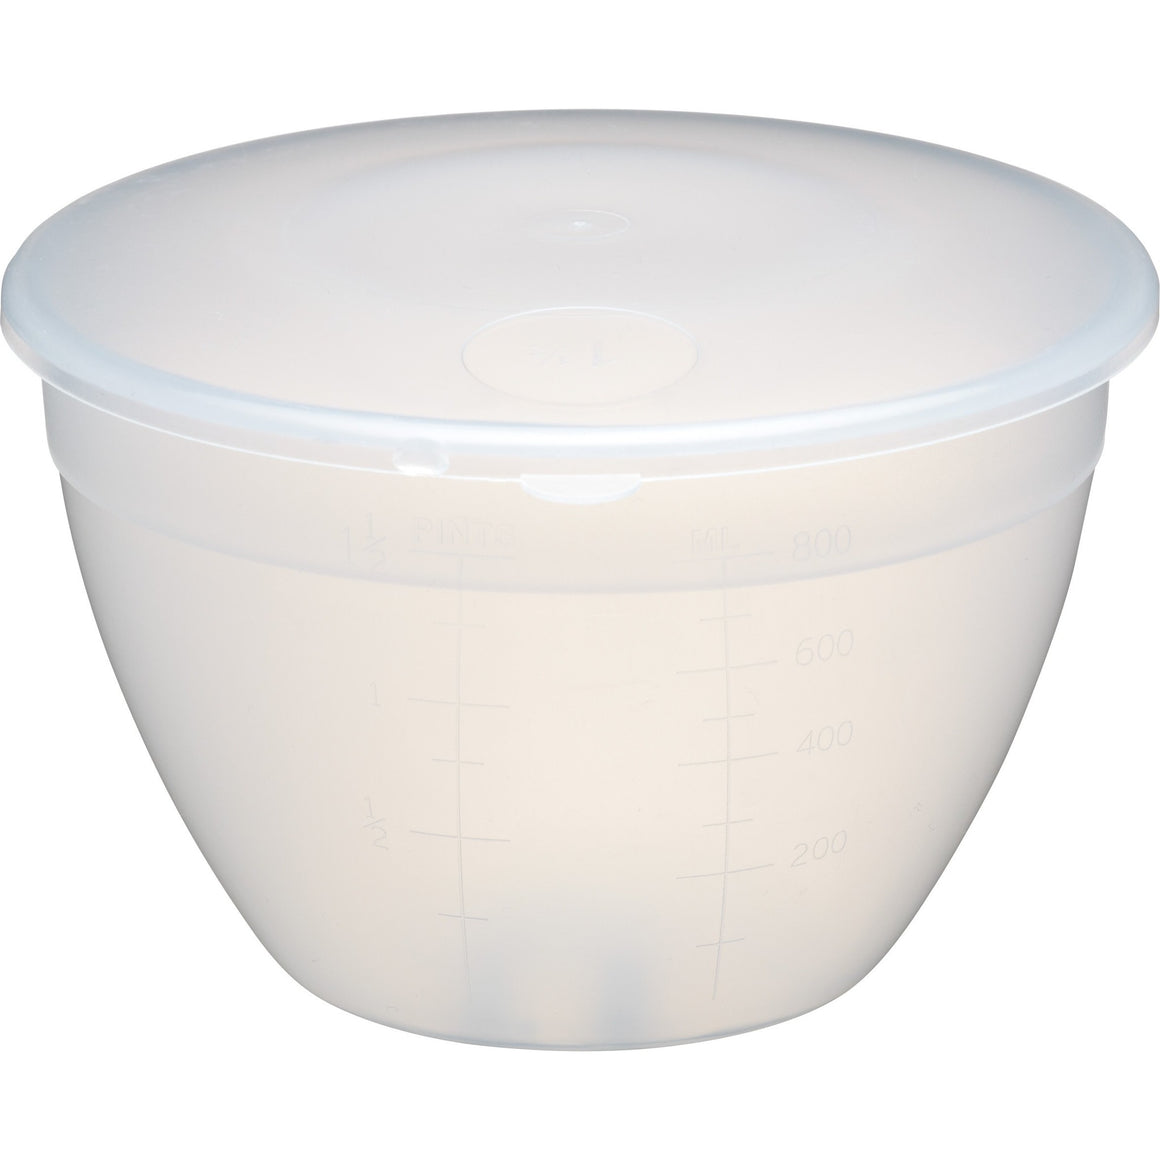 Kitchen Craft 1.5 Pint Plastic Pudding Bowl